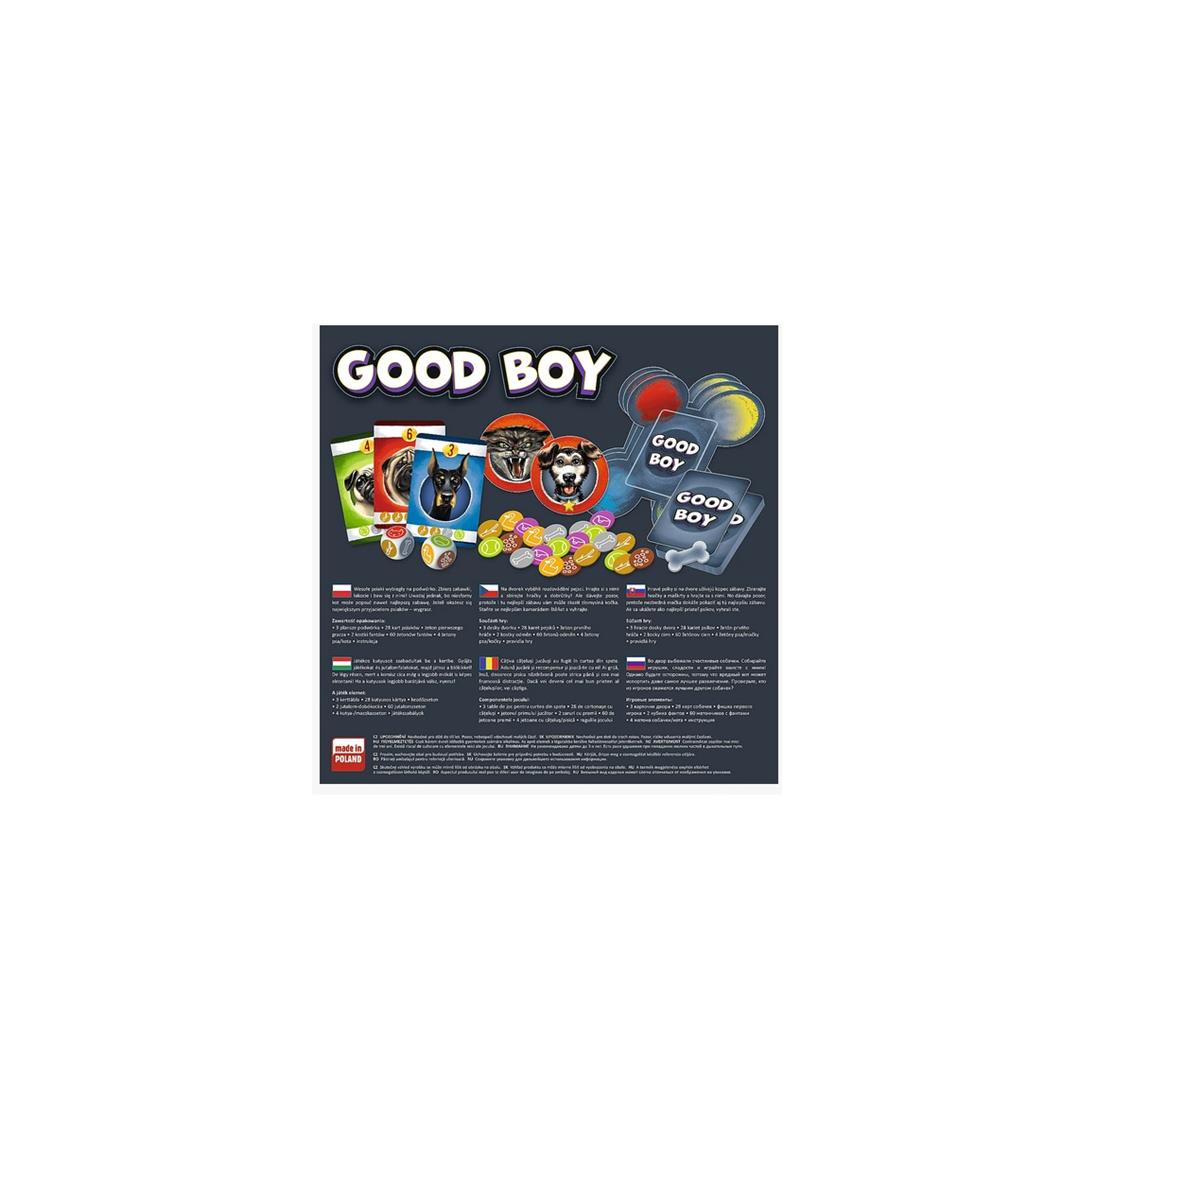 GRA GOOD BOY TRL 02288-14529